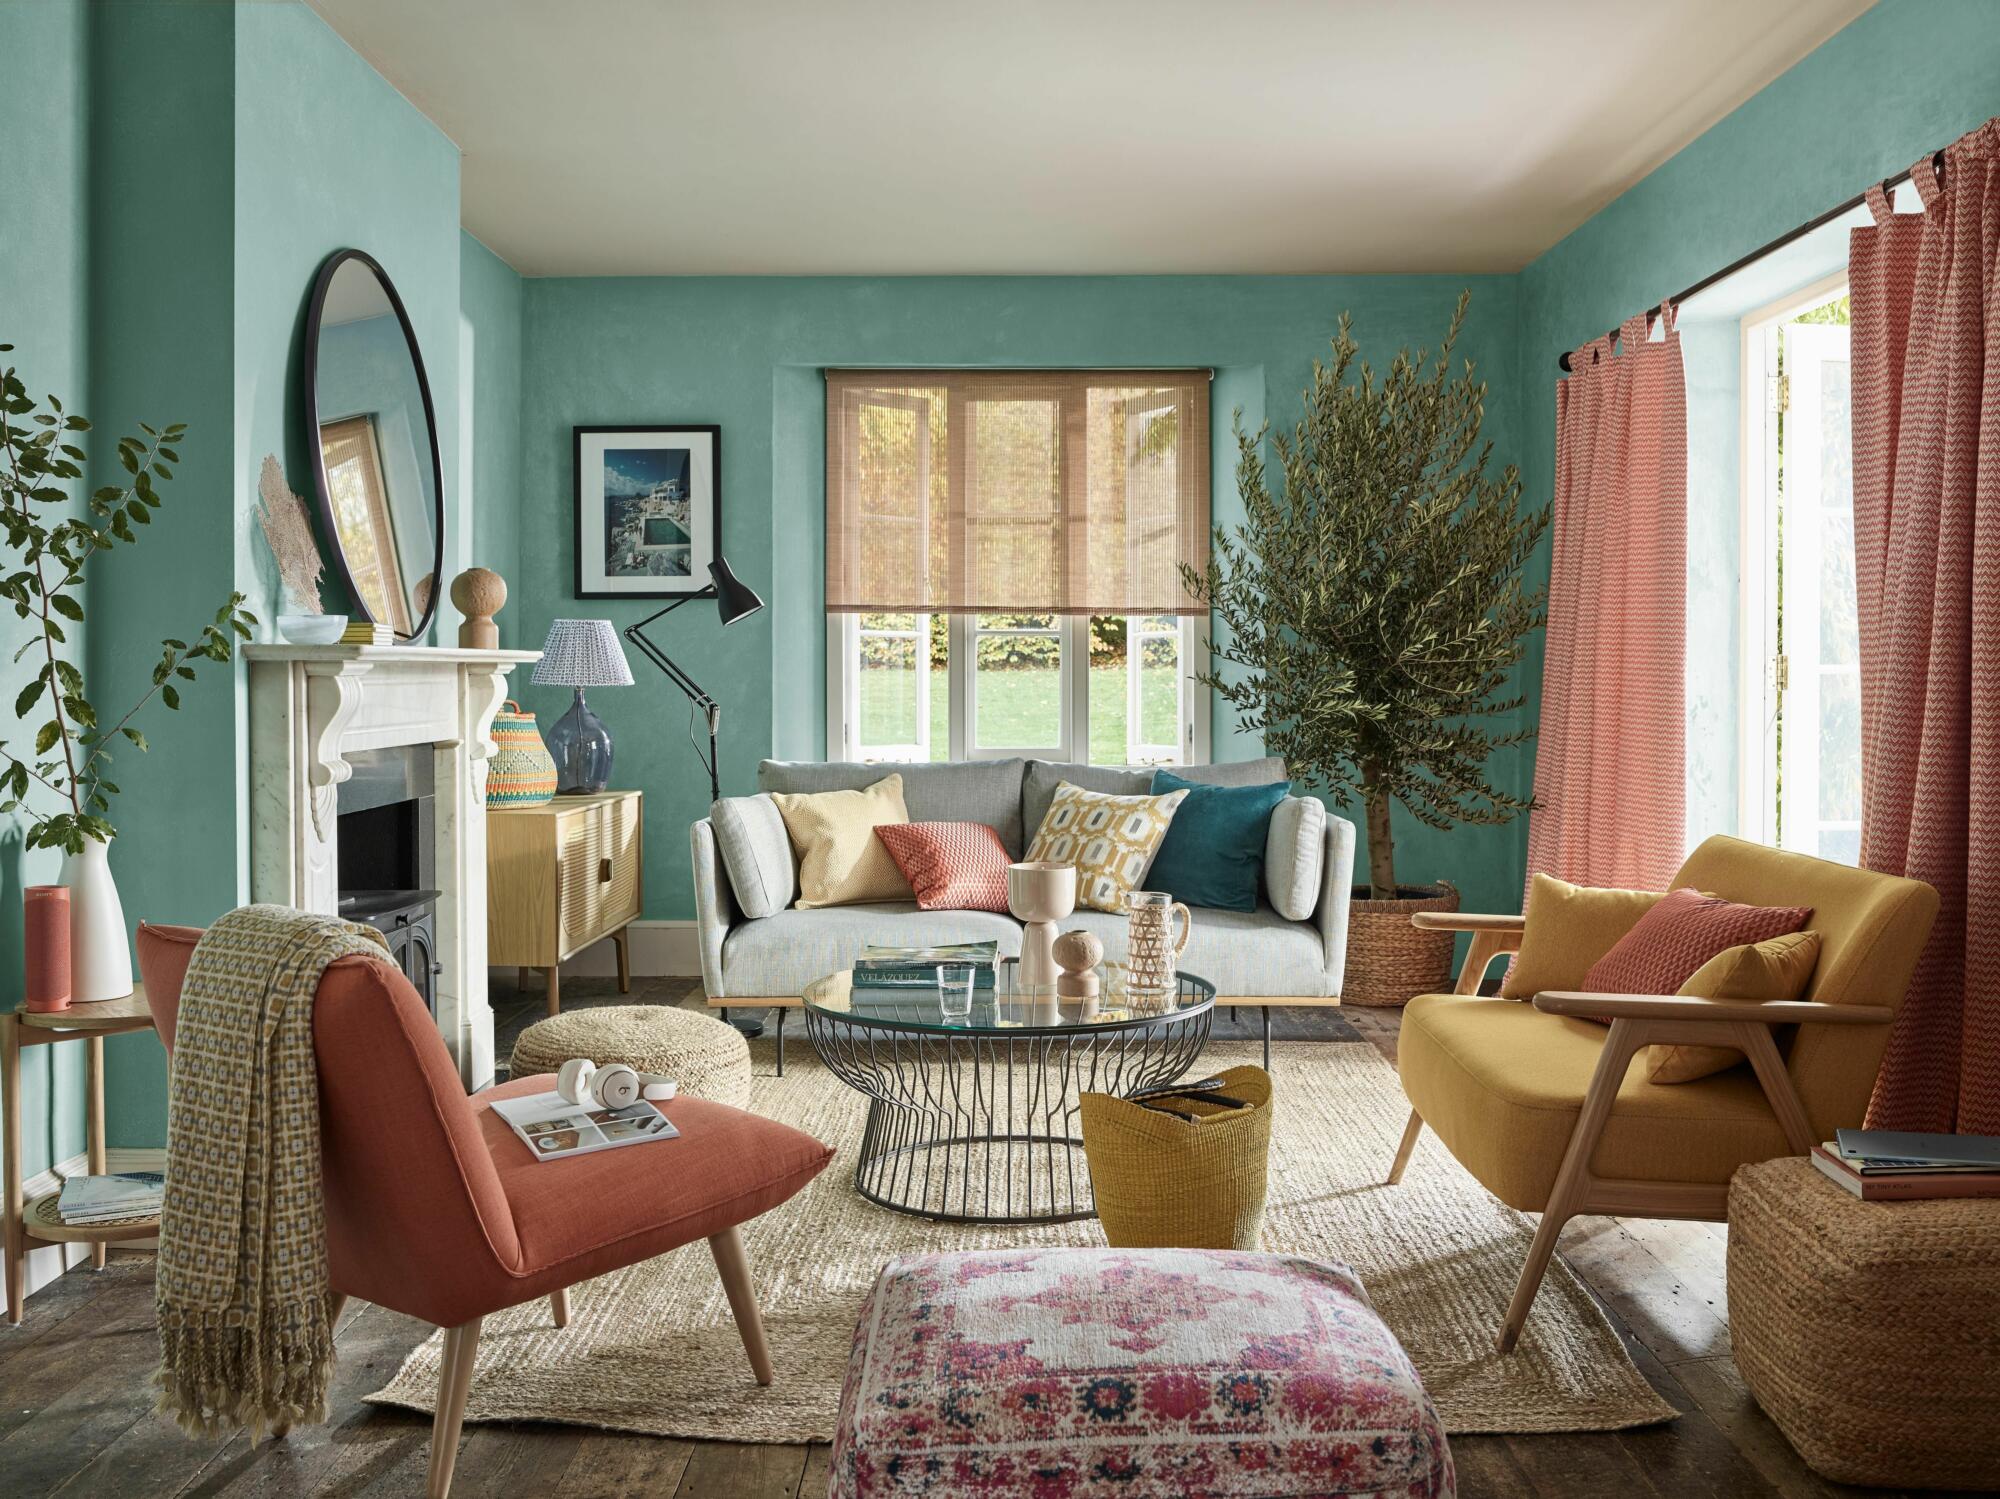 Colorful contemporary living room decor.